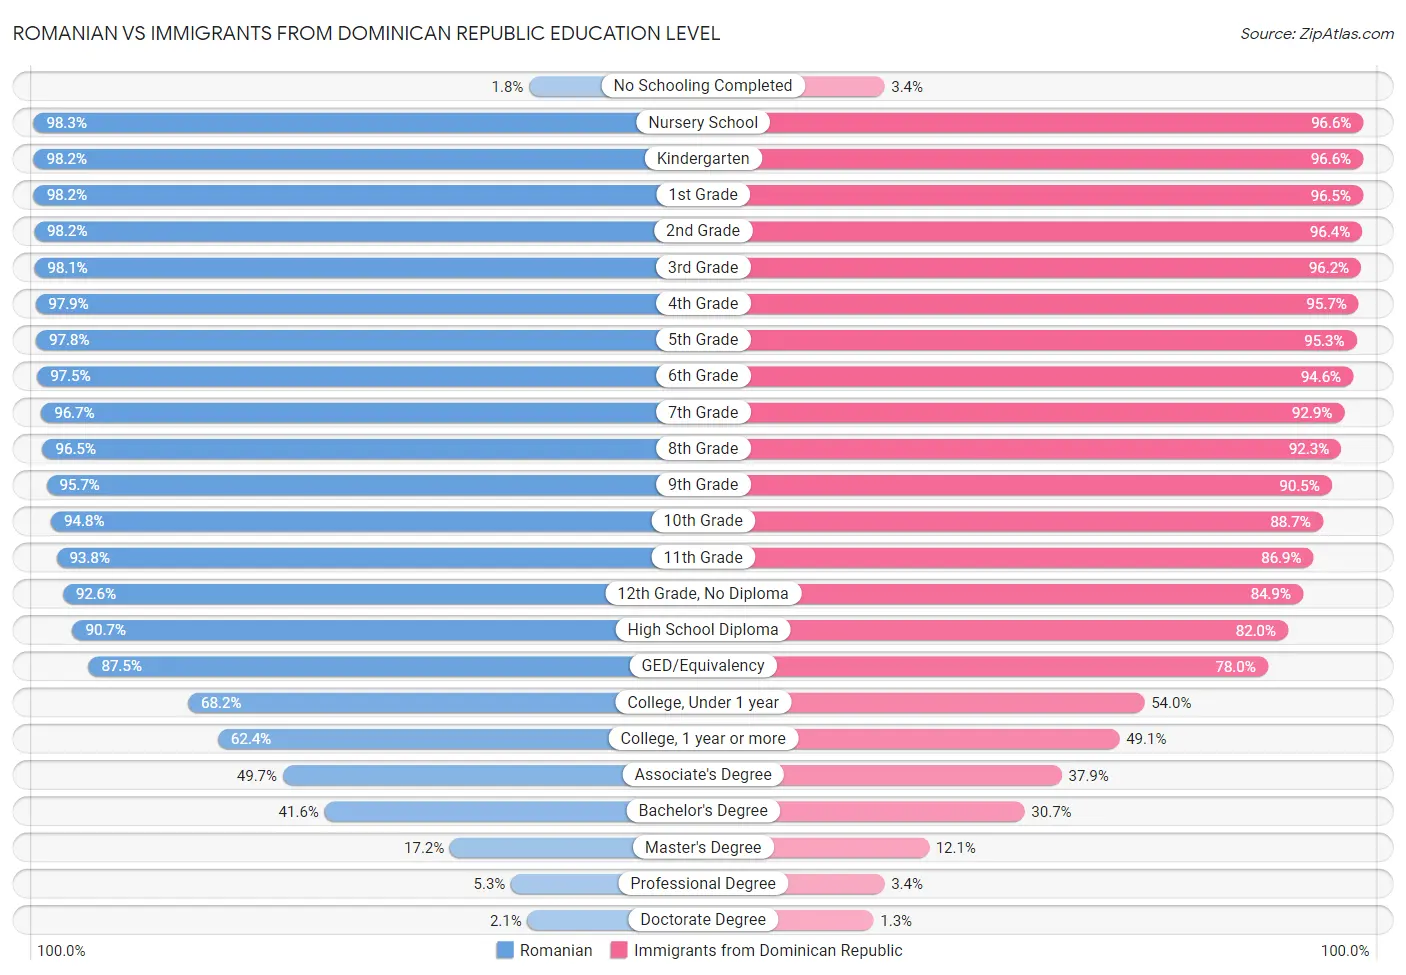 Romanian vs Immigrants from Dominican Republic Education Level